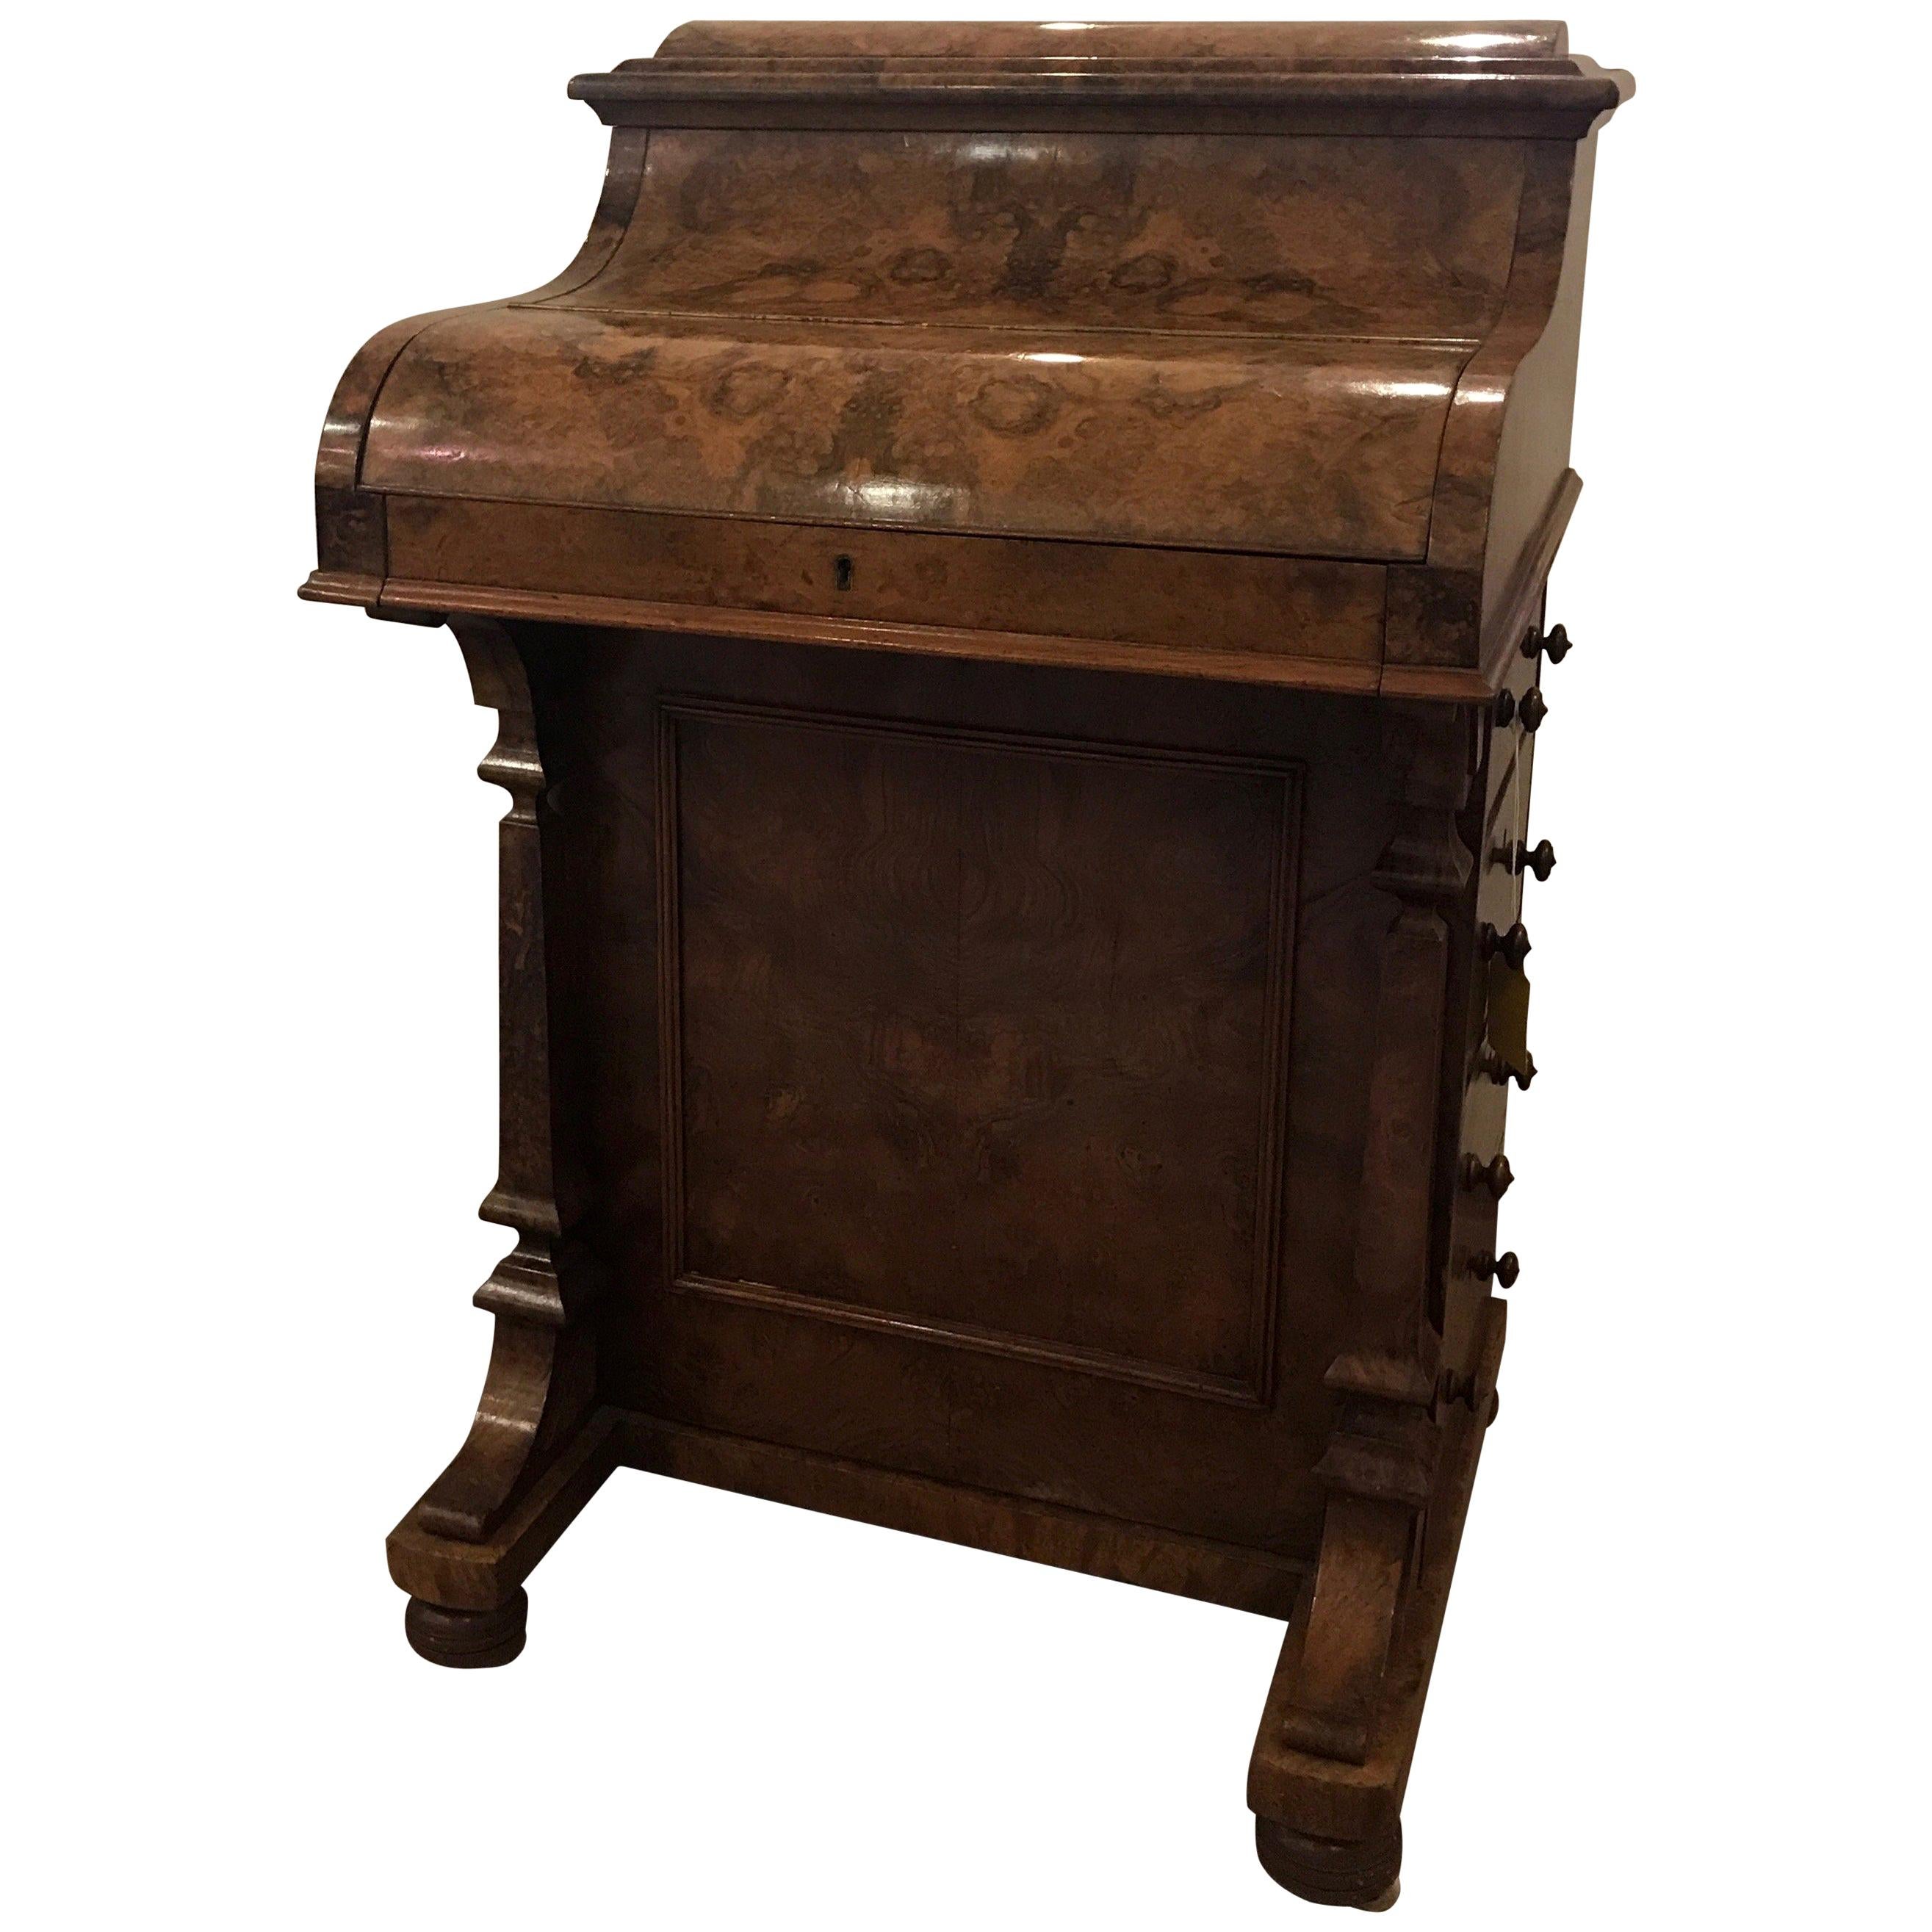 19th Century English Walnut Davenport Desk